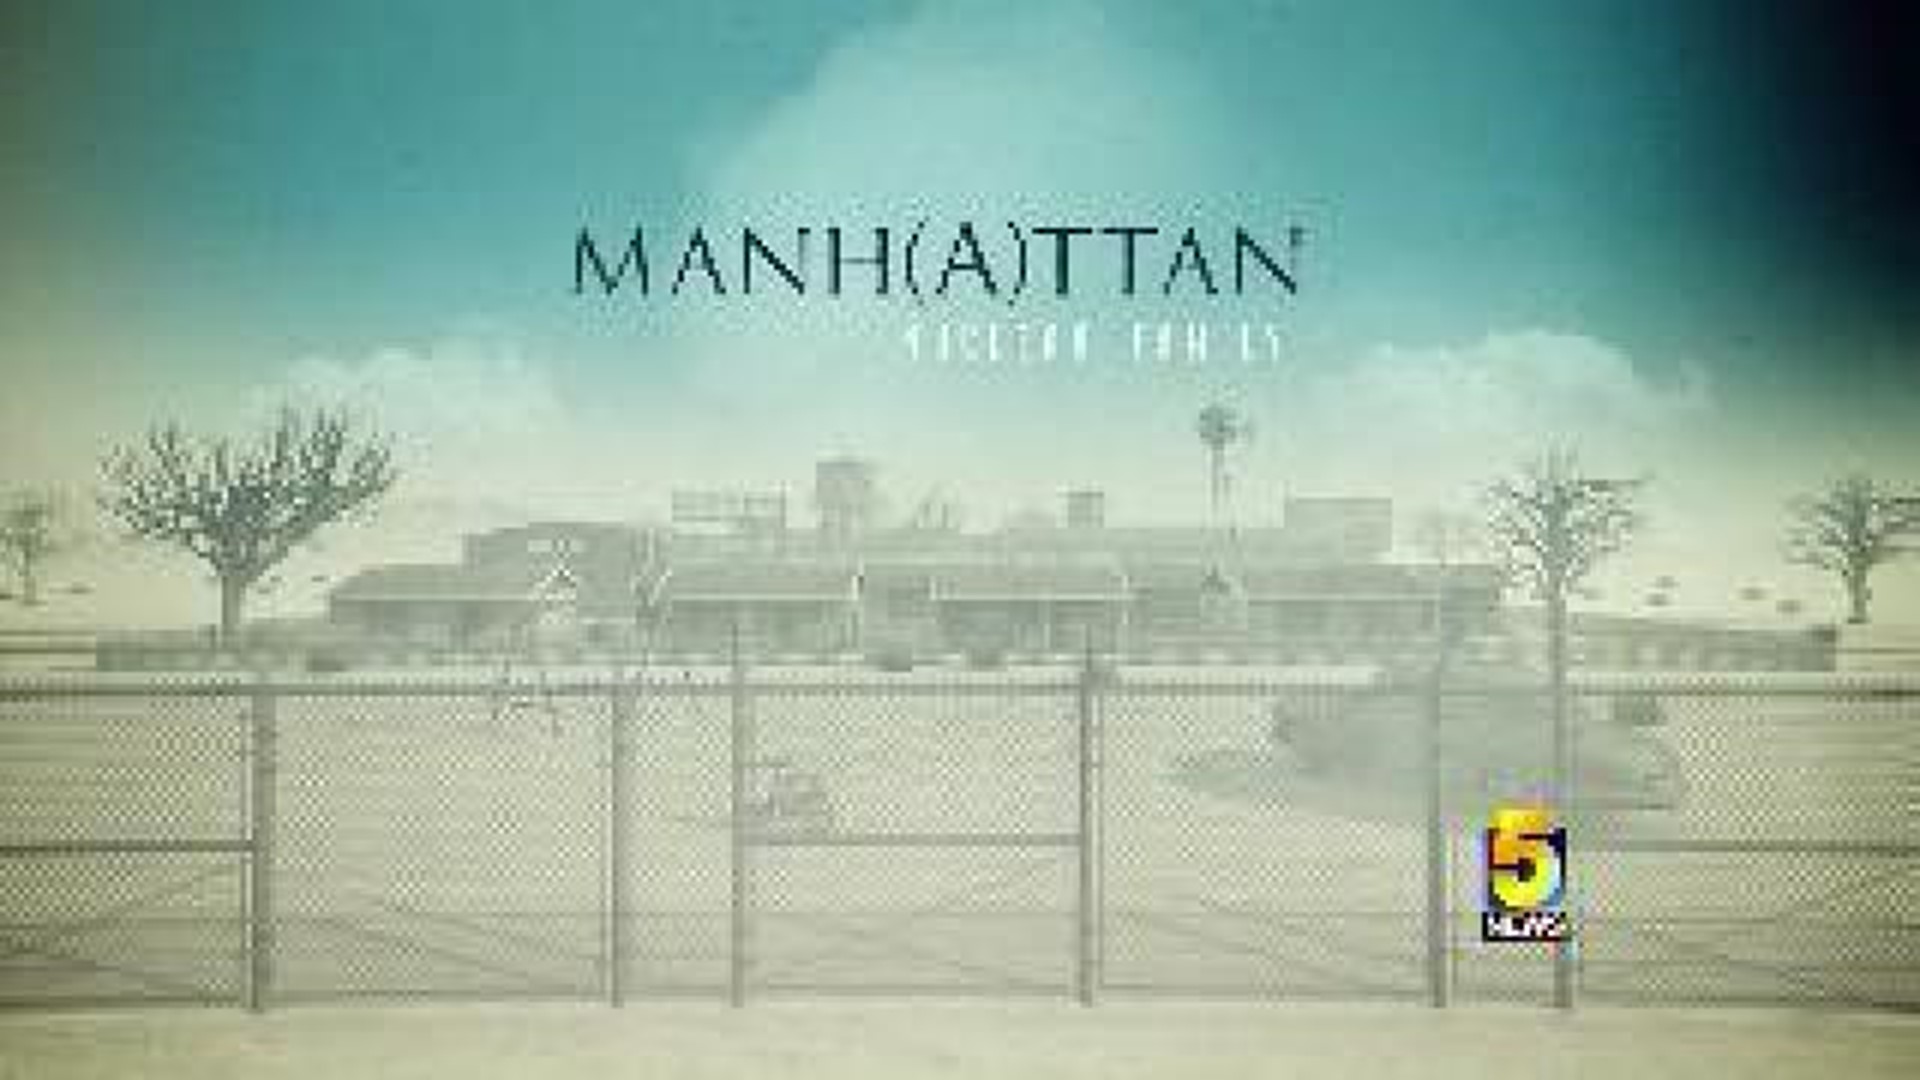 EXCLUSIVE: Manhattan - In Their Own Words